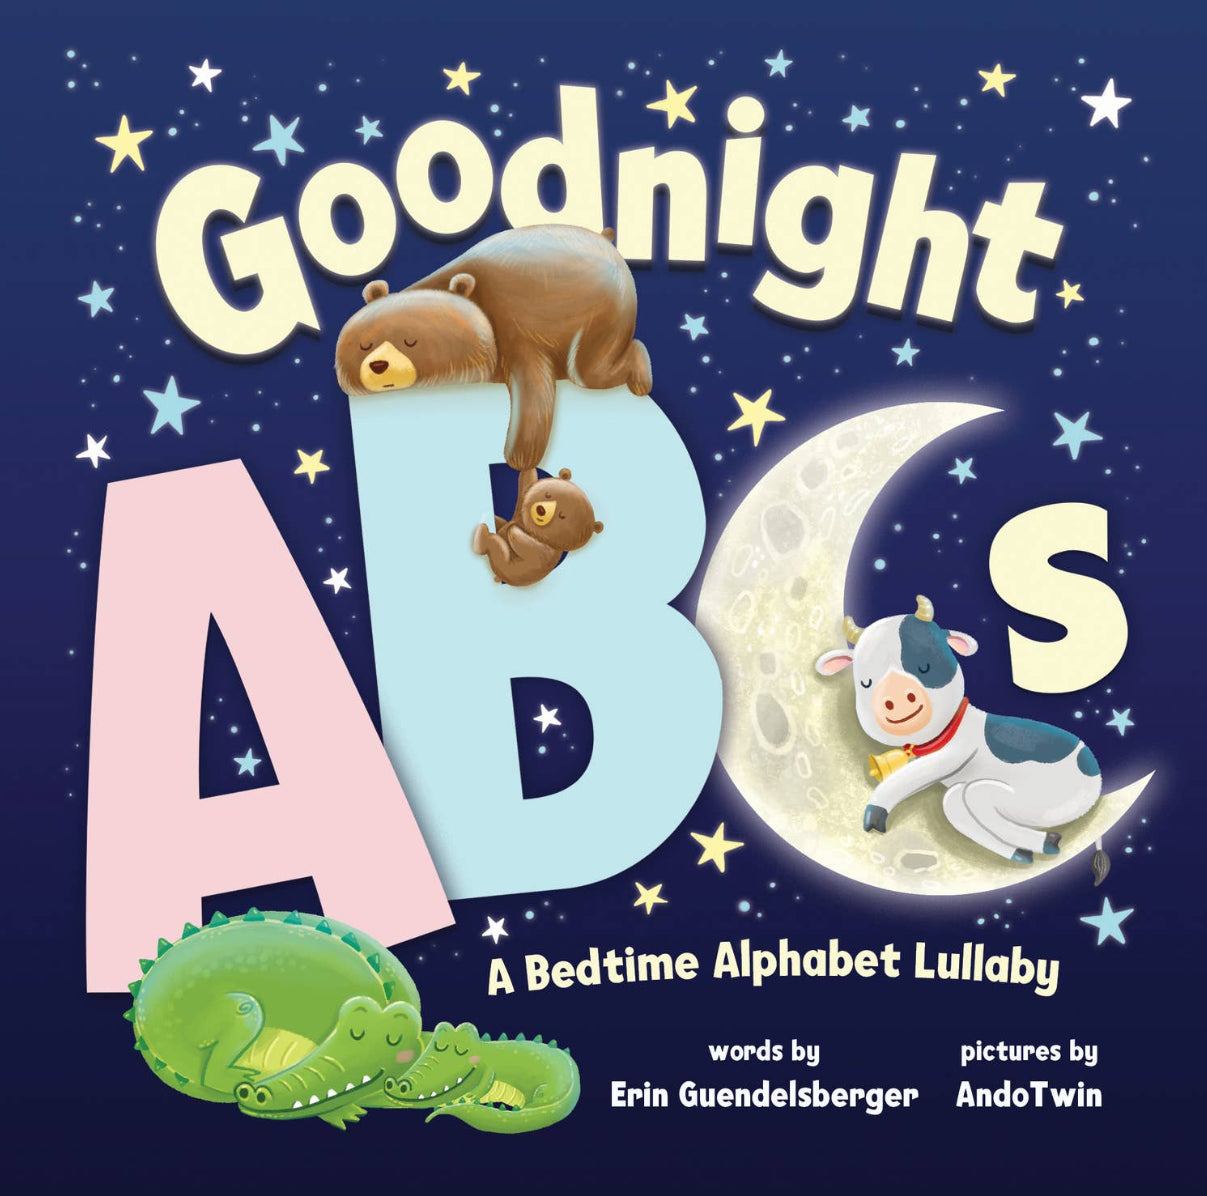 Goodnight ABC’s: A Bedtime Alphabet Lullabye